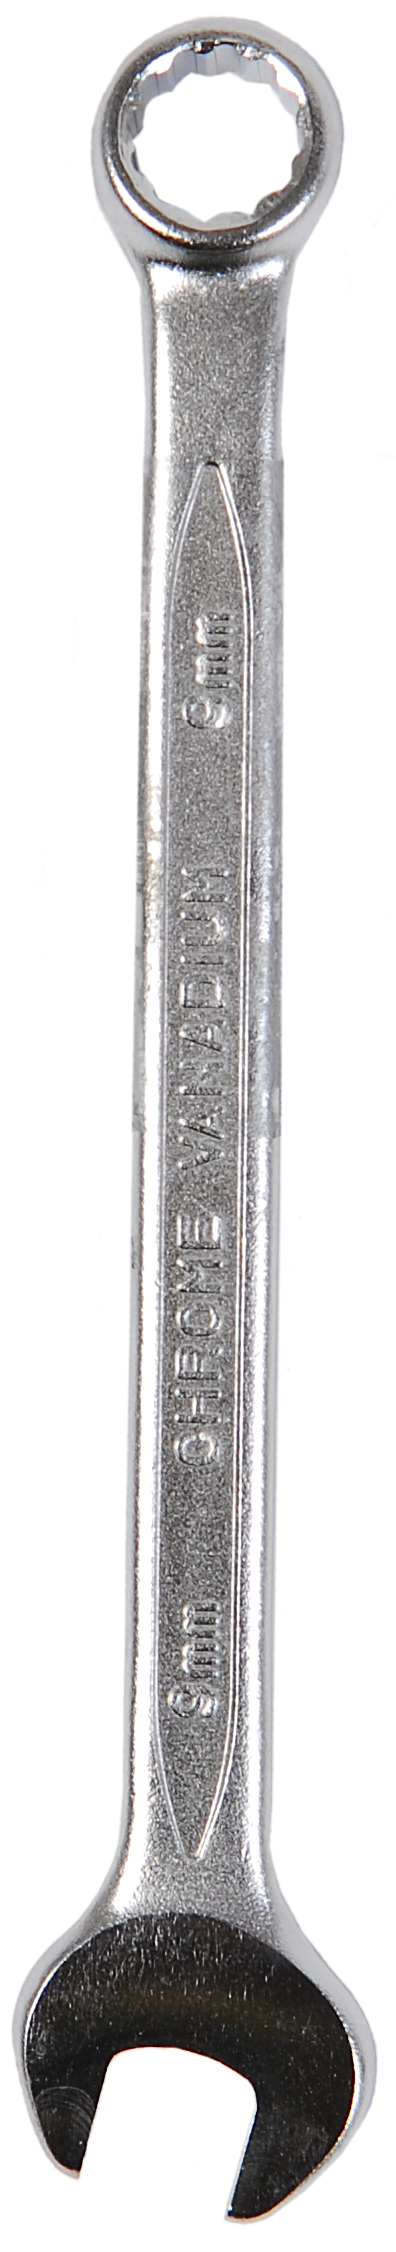 Stanley Slimline Combination Wrench 9mm